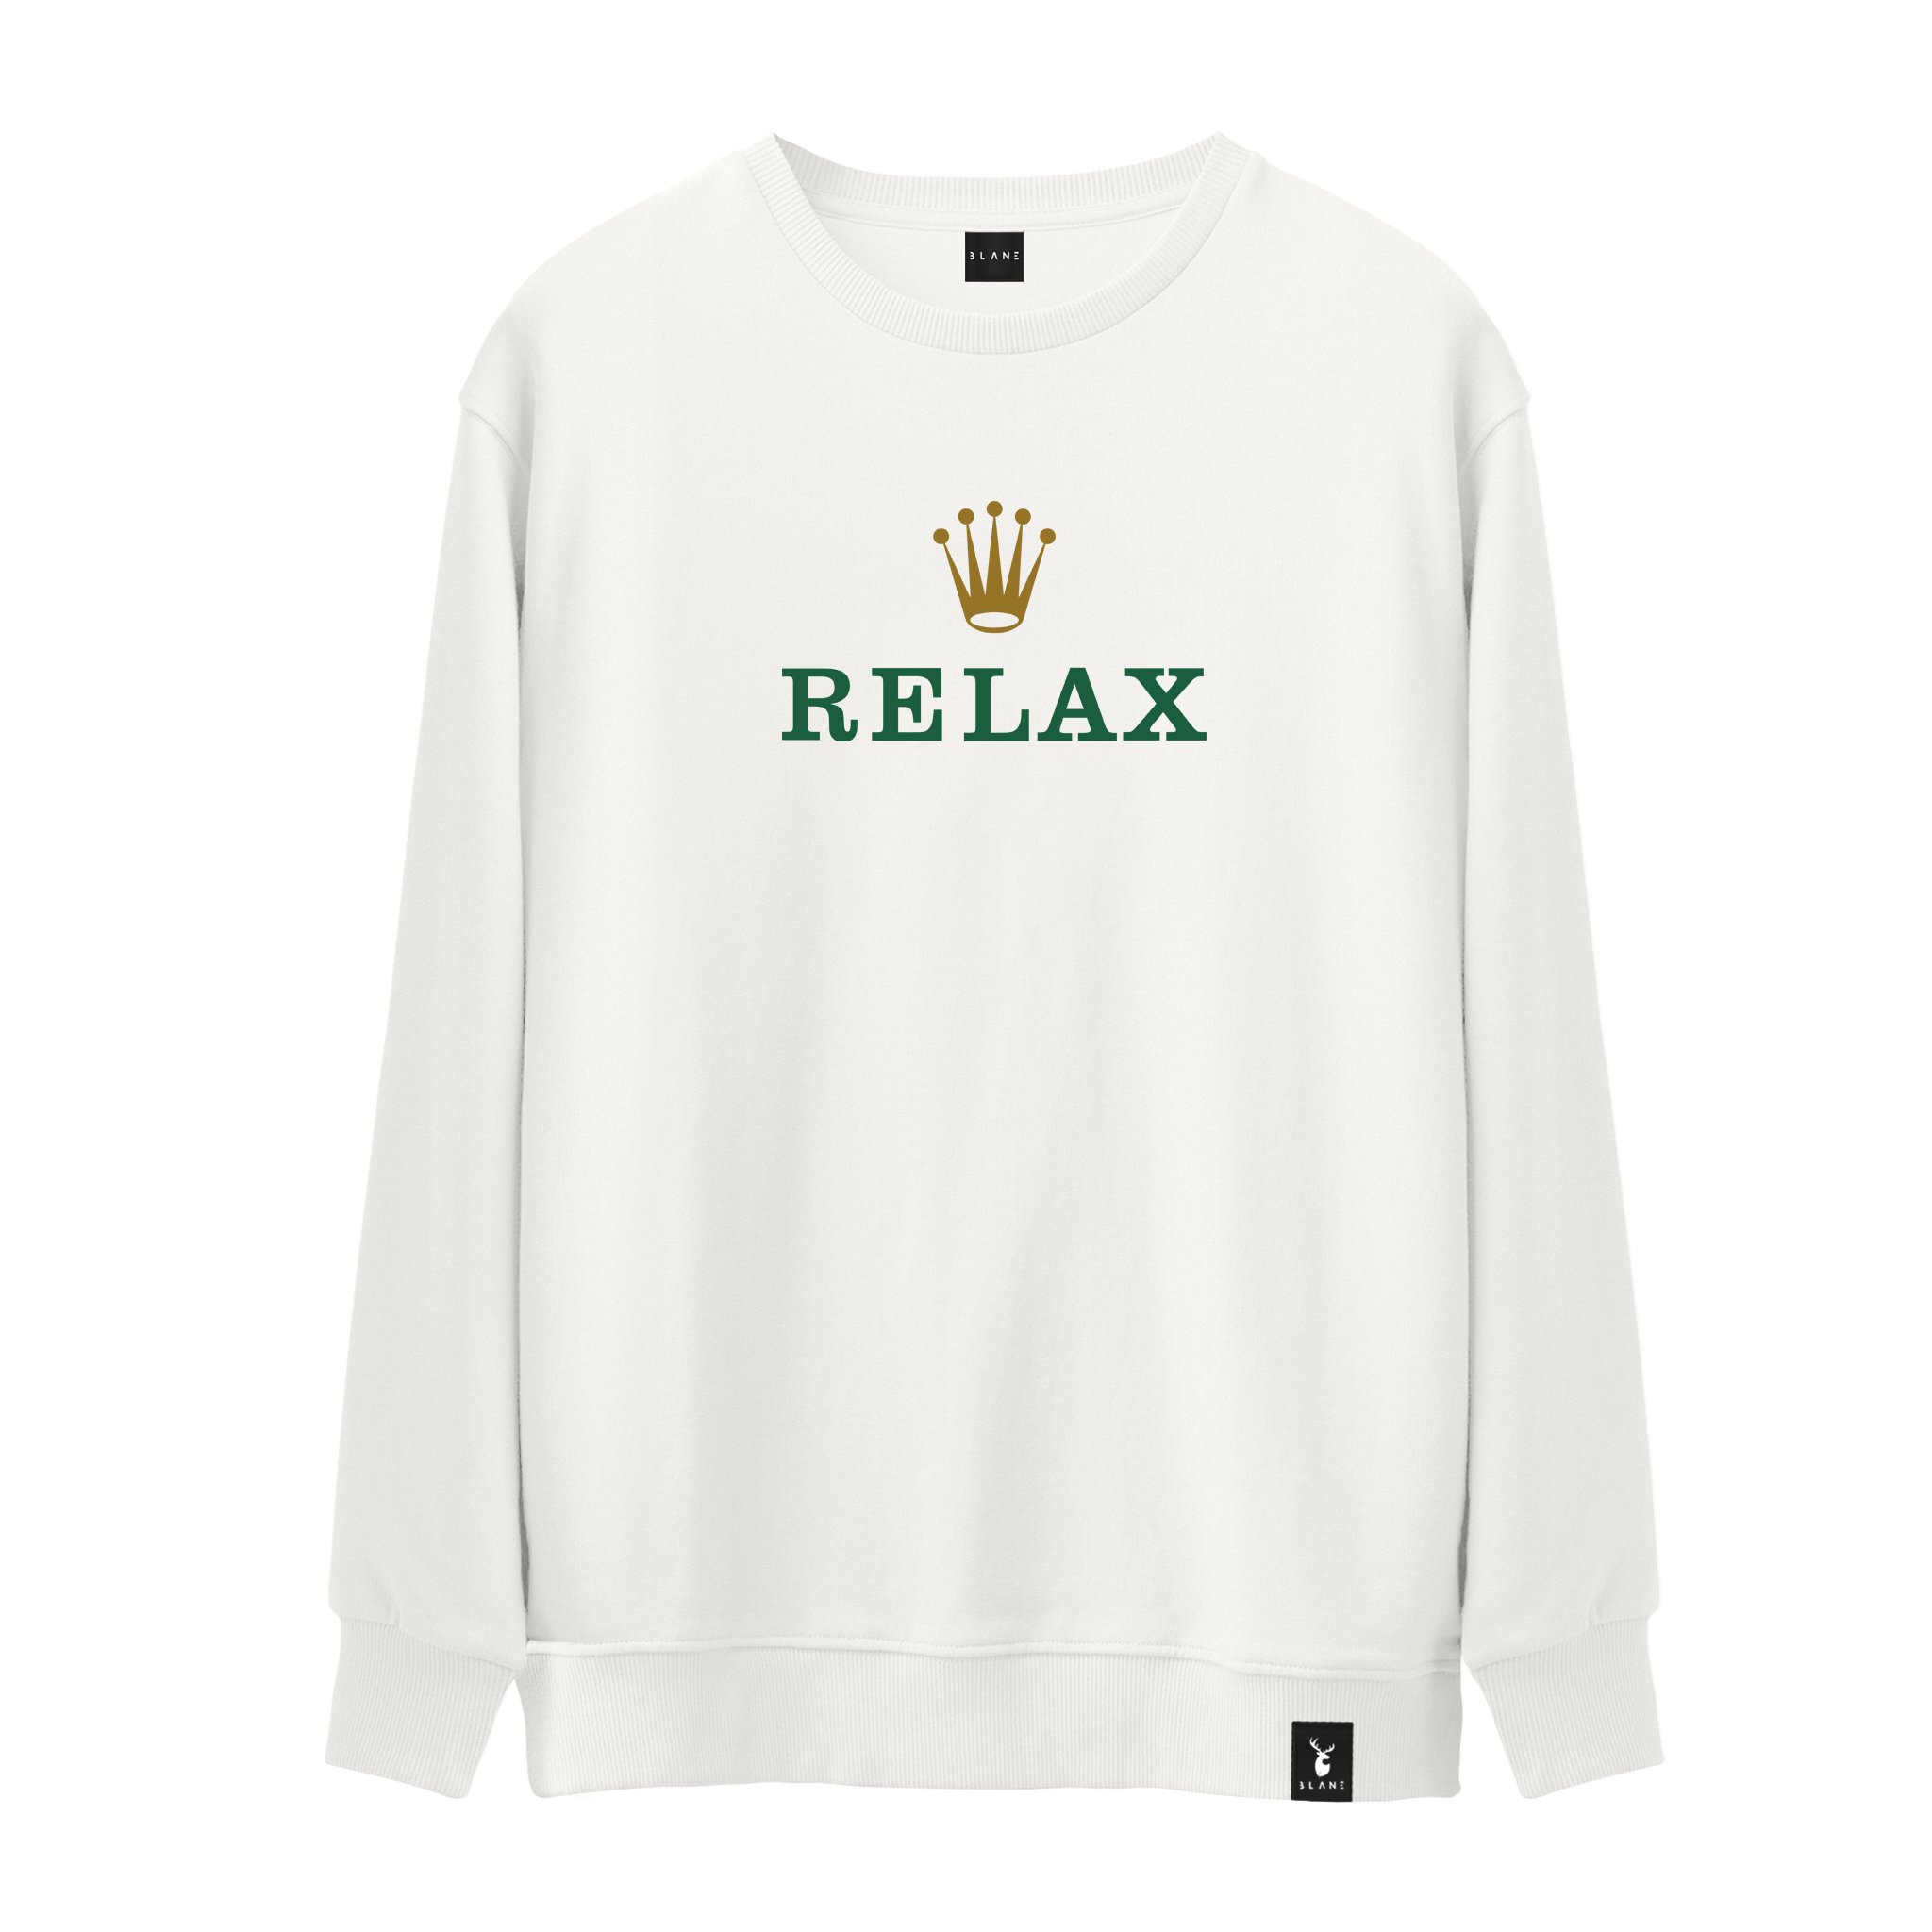 King Relax - Sweatshirt